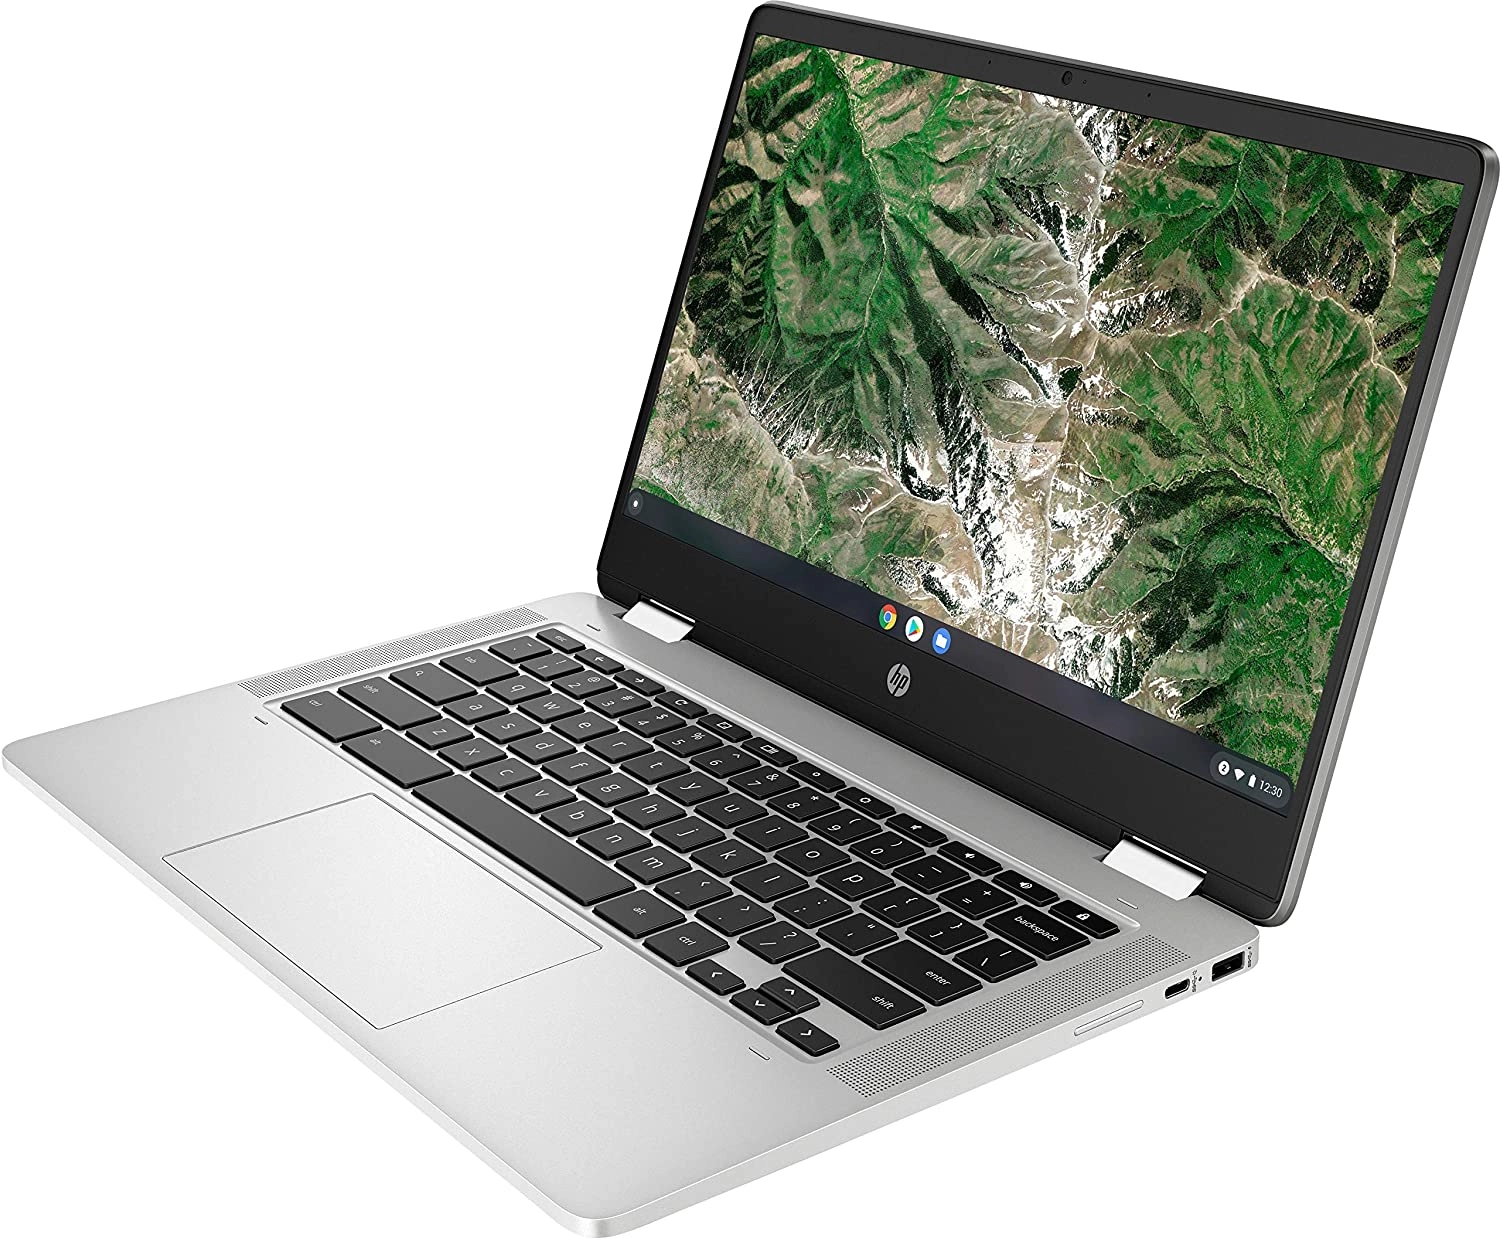 HP 14a-ca0003ns laptop image